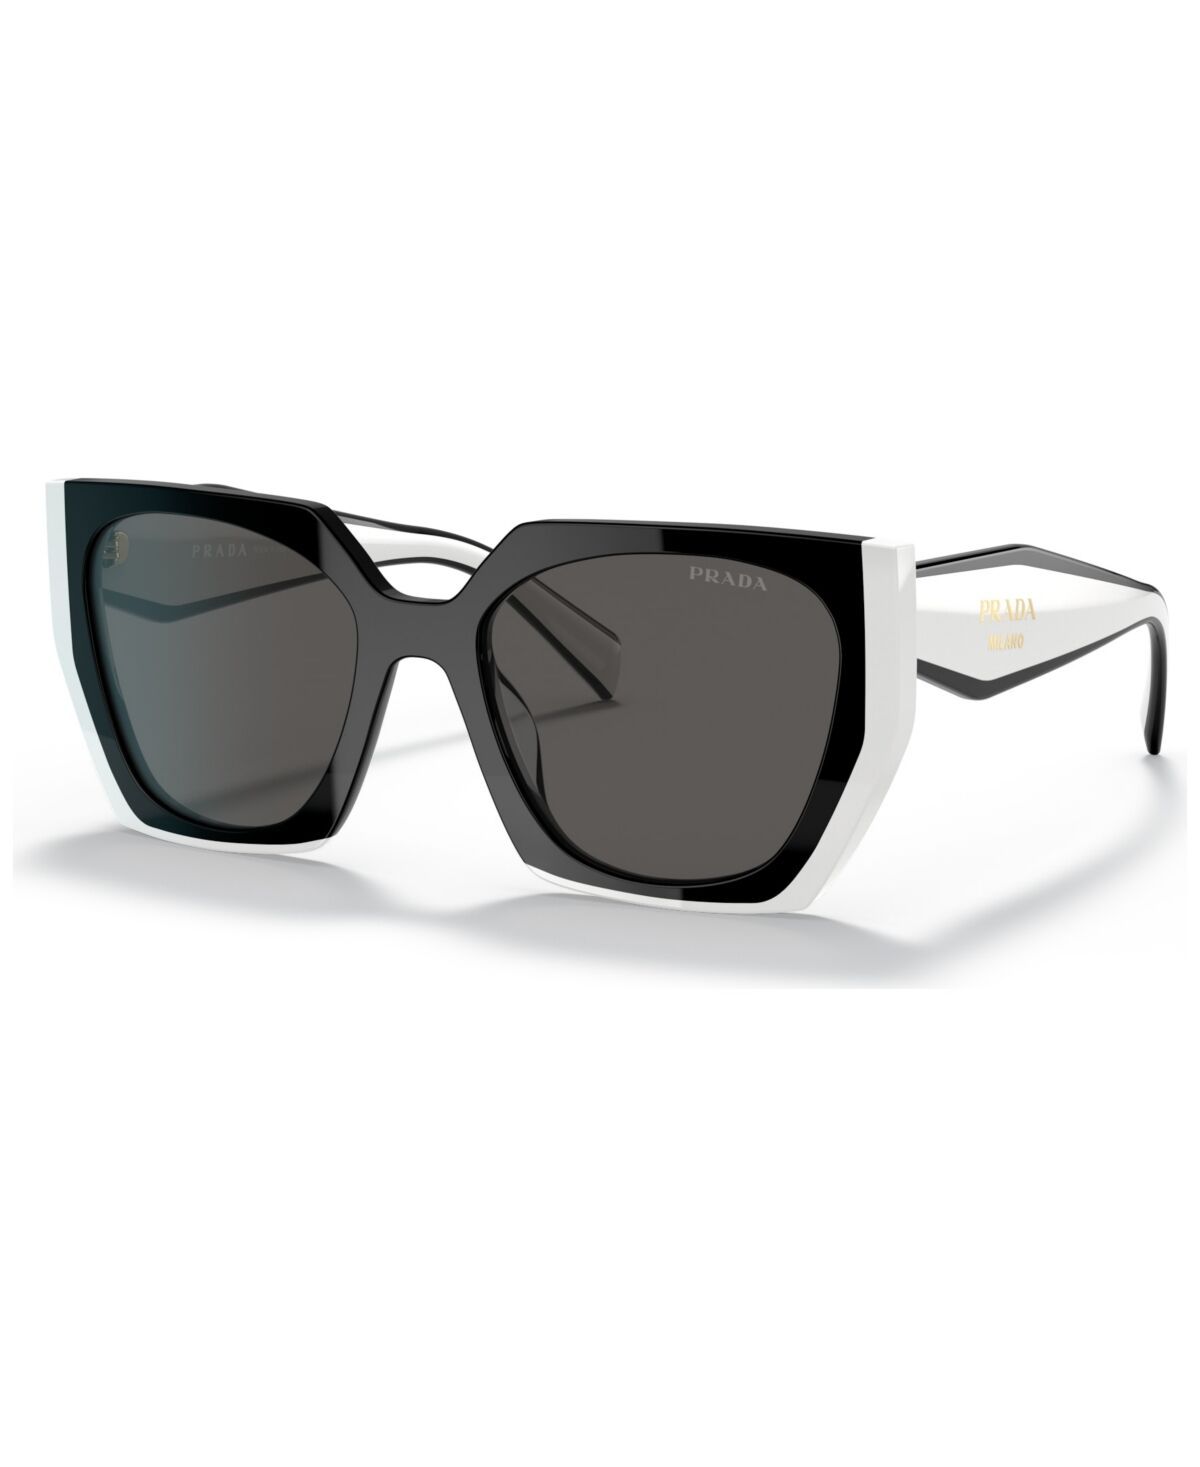 Prada Women's Sunglasses, Pr 15WS - Black, Talc